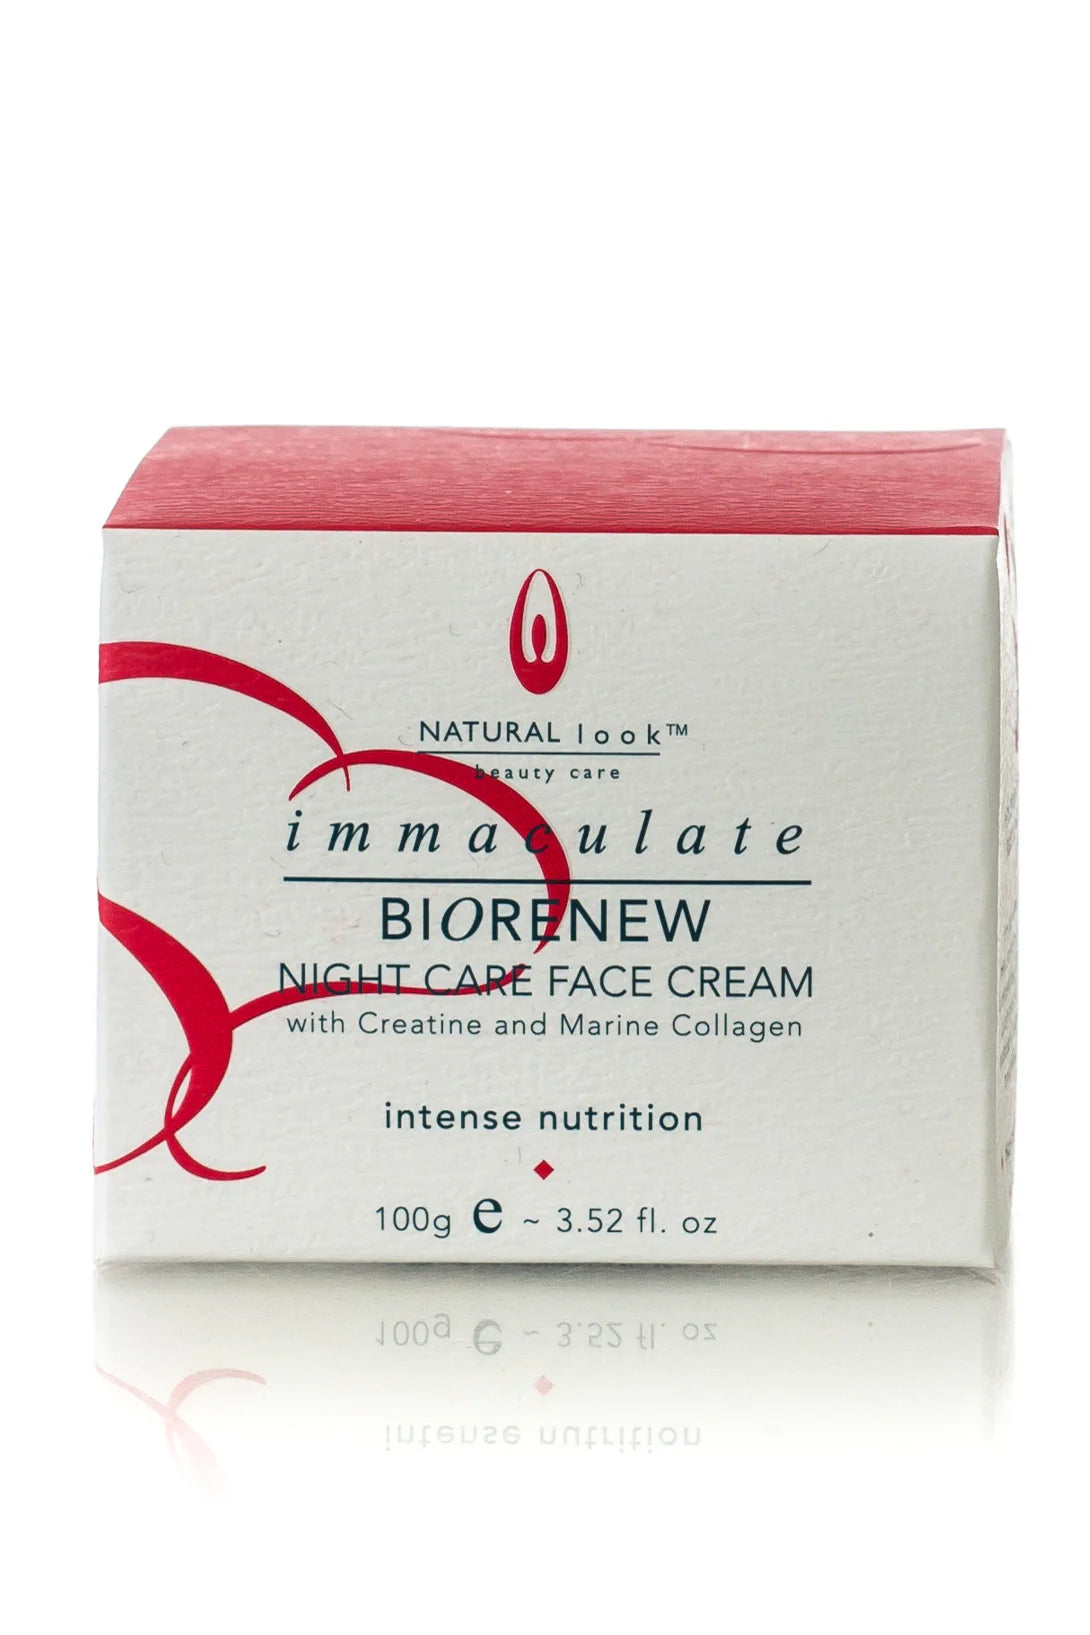 Natural Look Immaculate Biorenew Night Cream